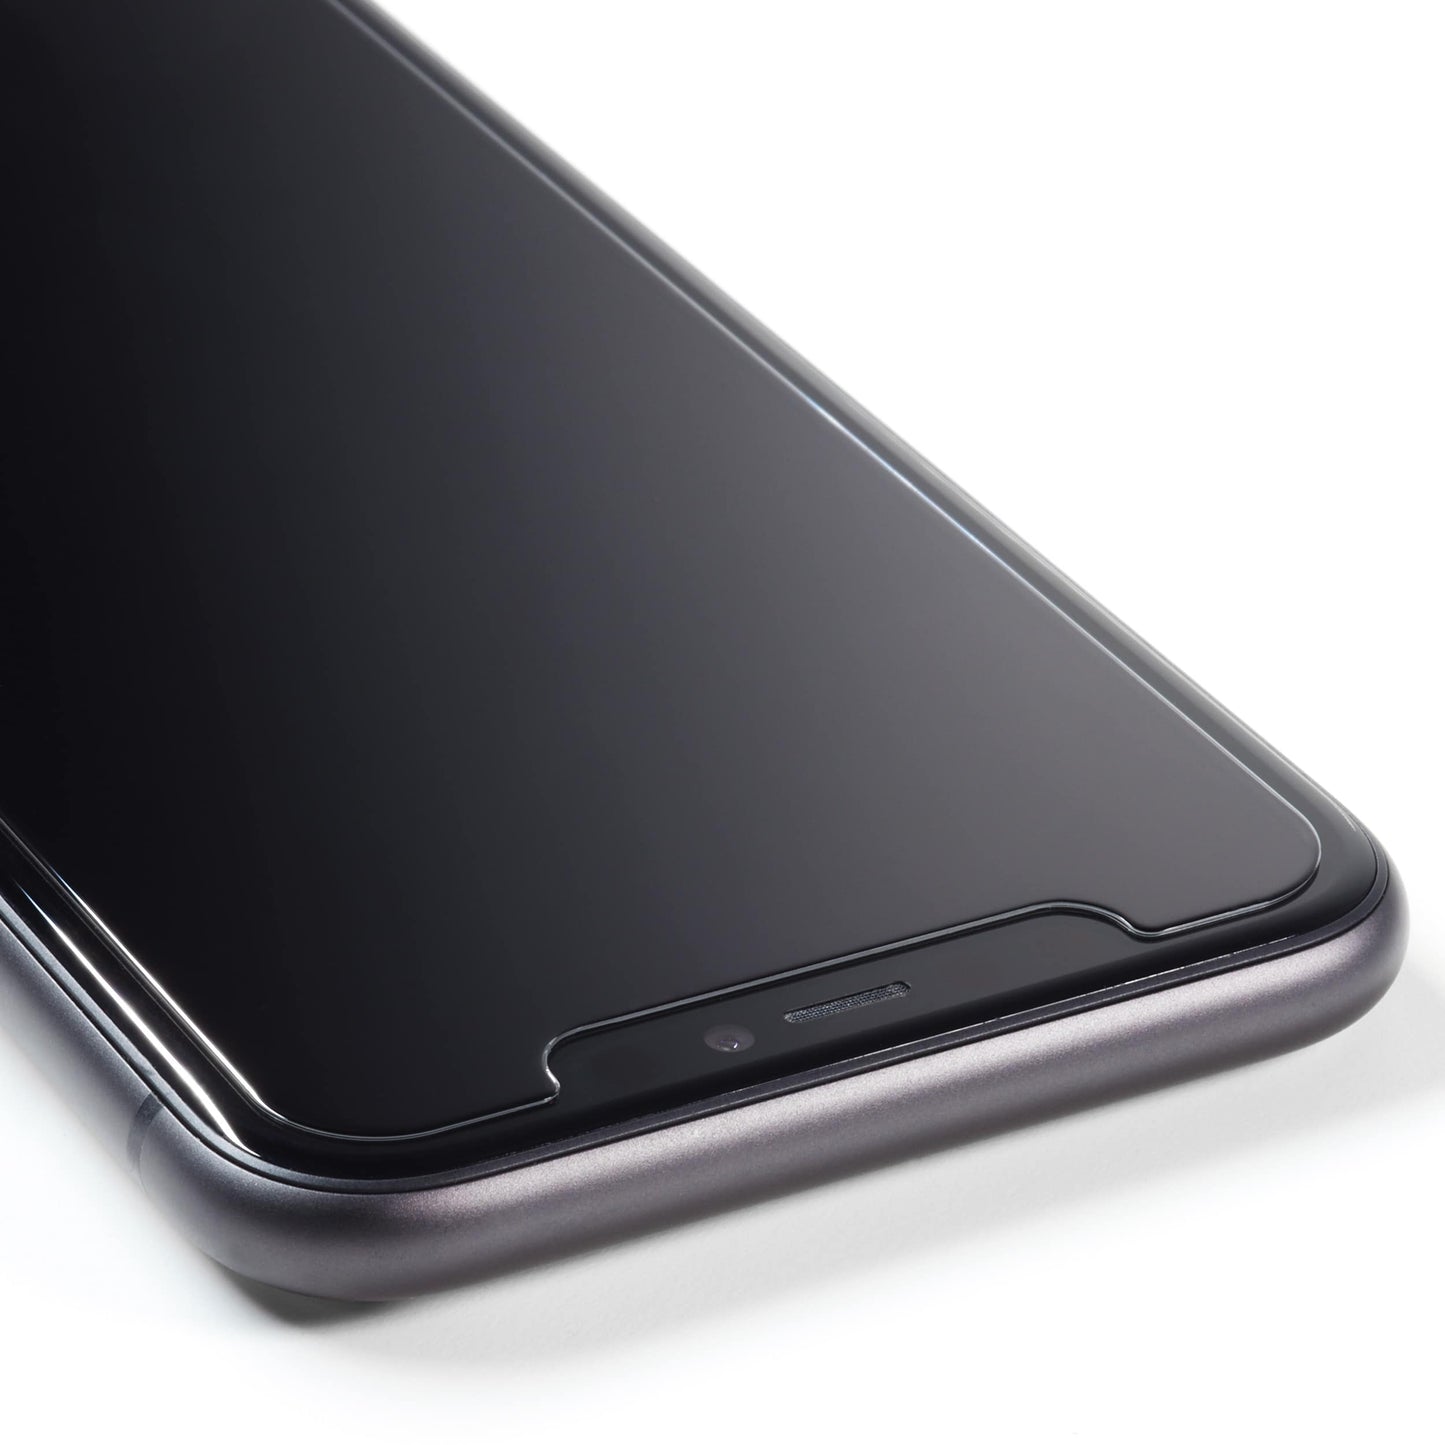 iPhone 11 Pro Max - sapphire glass